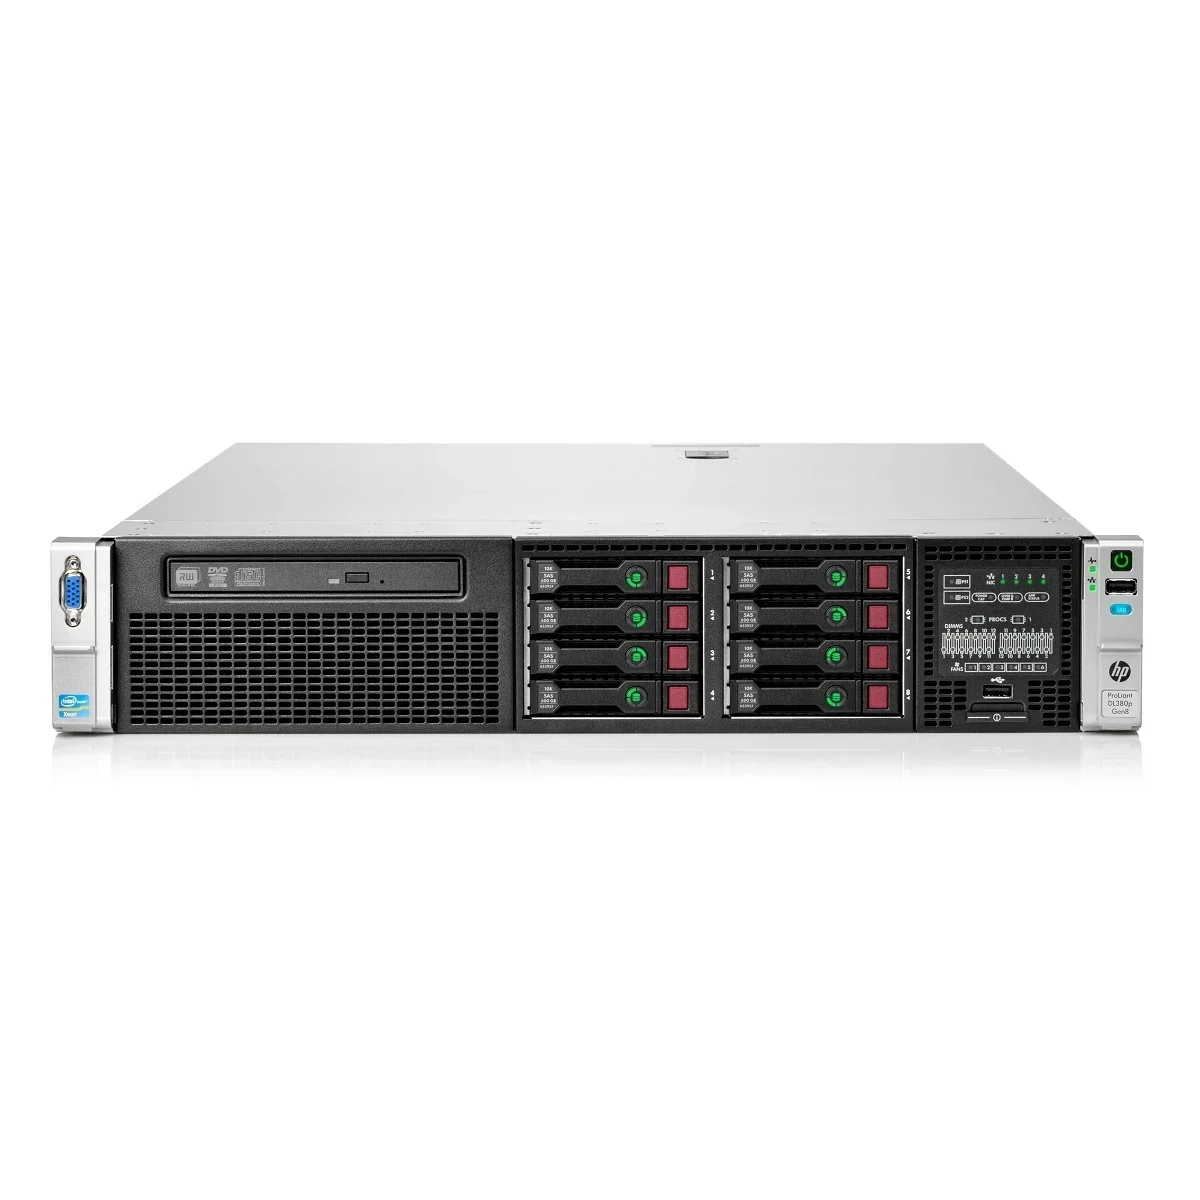 HPE ProLiant DL380p Gen8 2U Rack Server